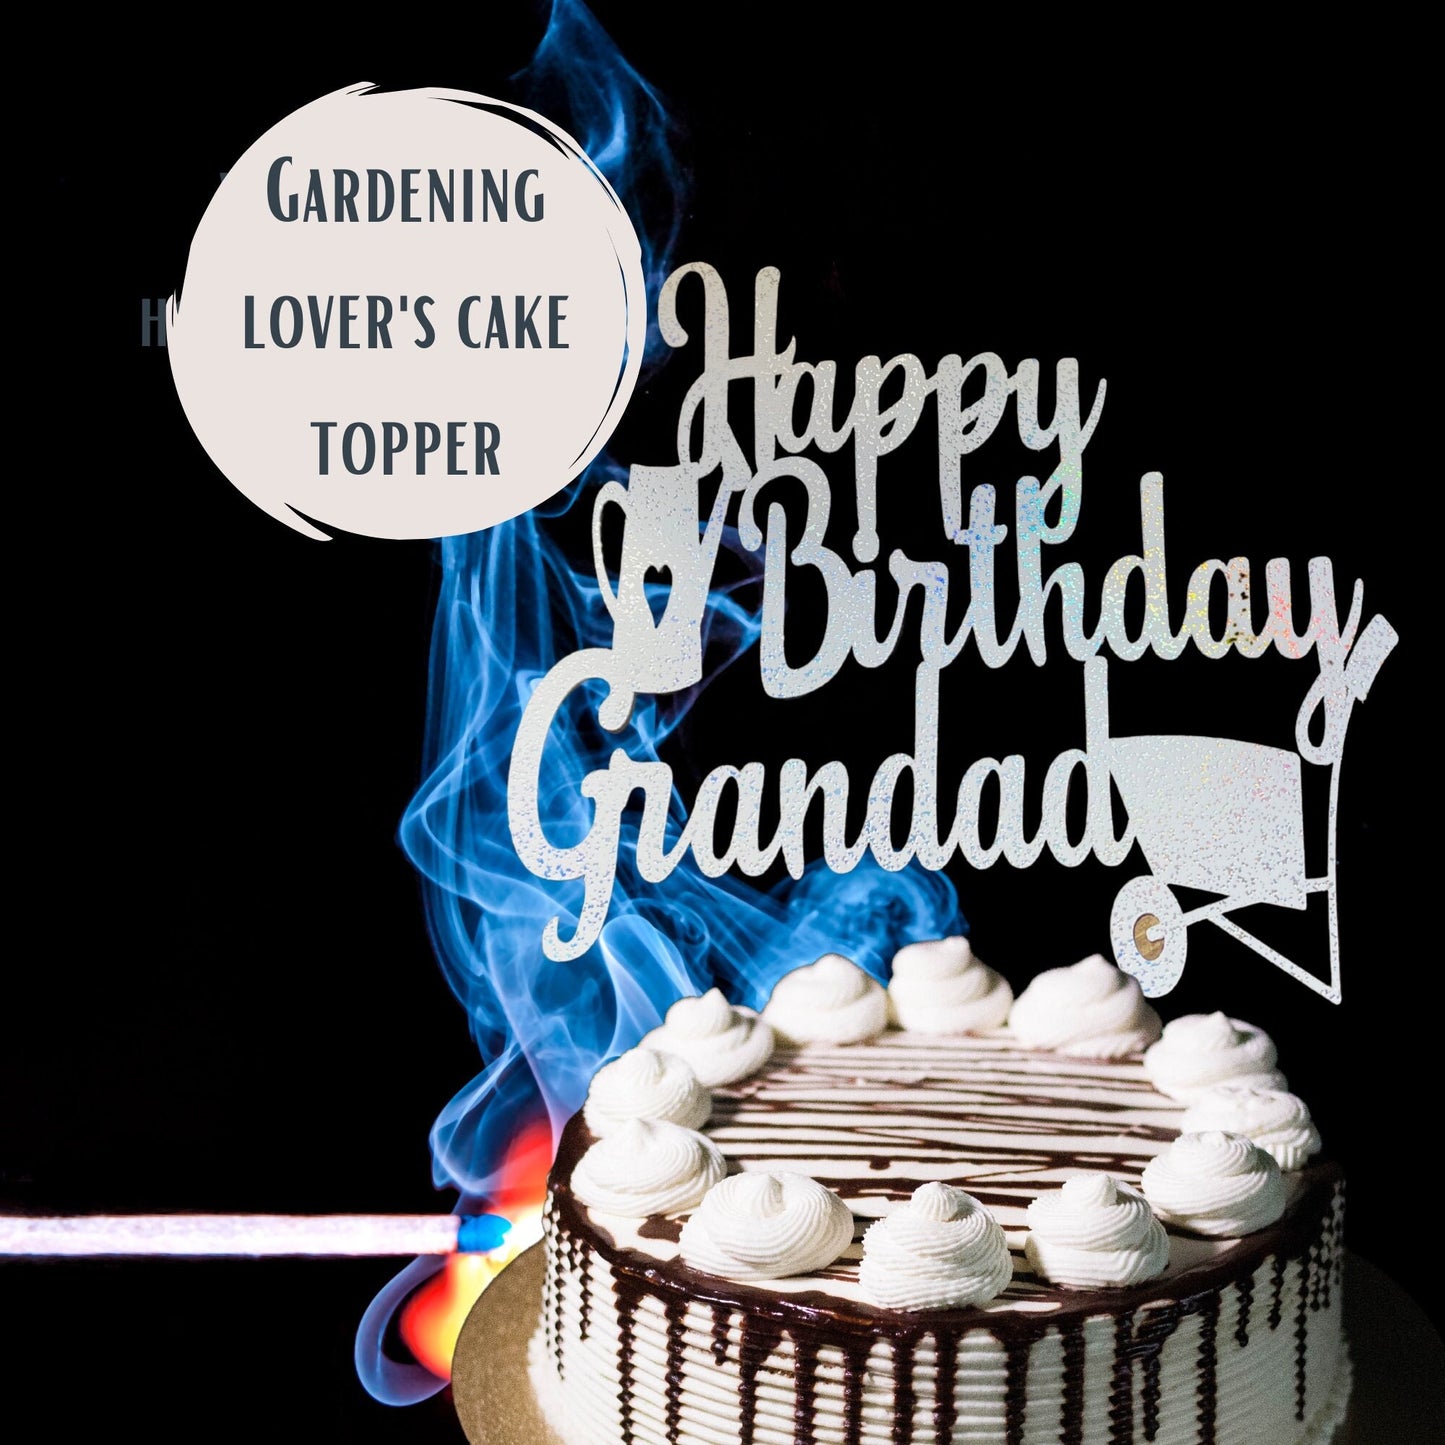 Happy Birthday Grandad Cake Topper Gardening Gift Celebration Party Cake Topper Party Gift for Garden Lovers Grandaddy Birthday Cake Topper